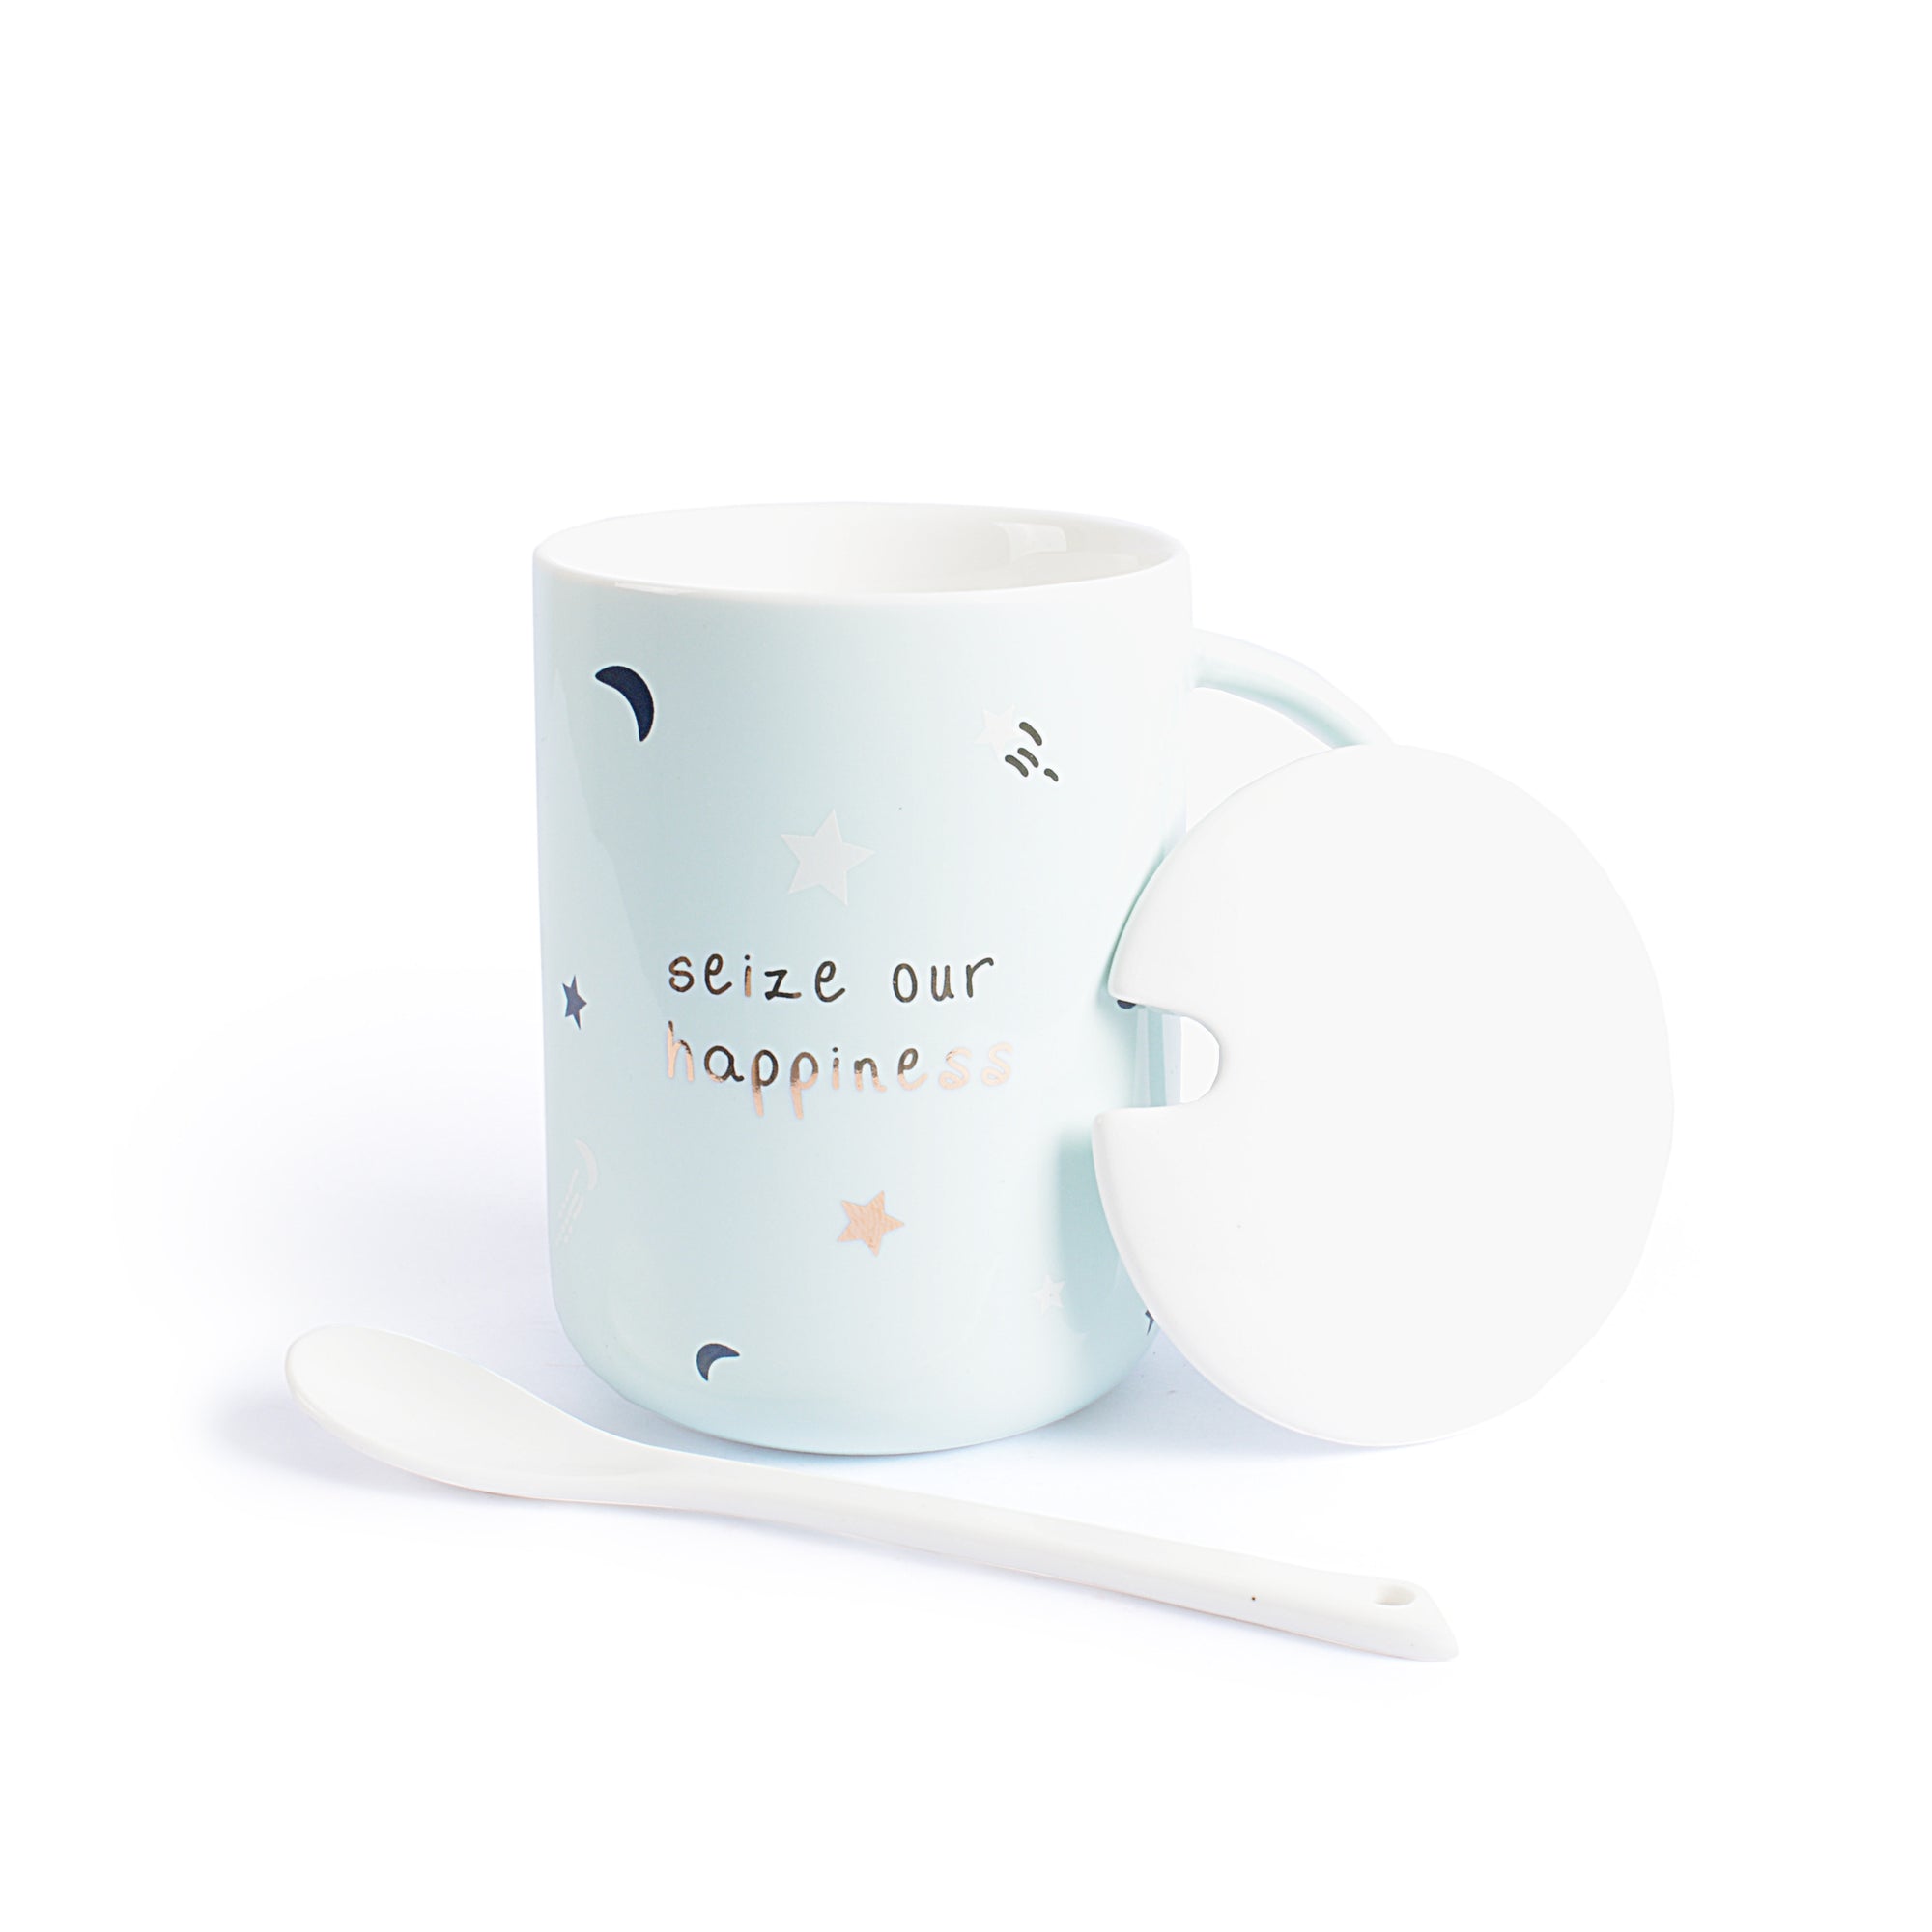 Happiness Design Ceramic Mug With Lid & Spoon